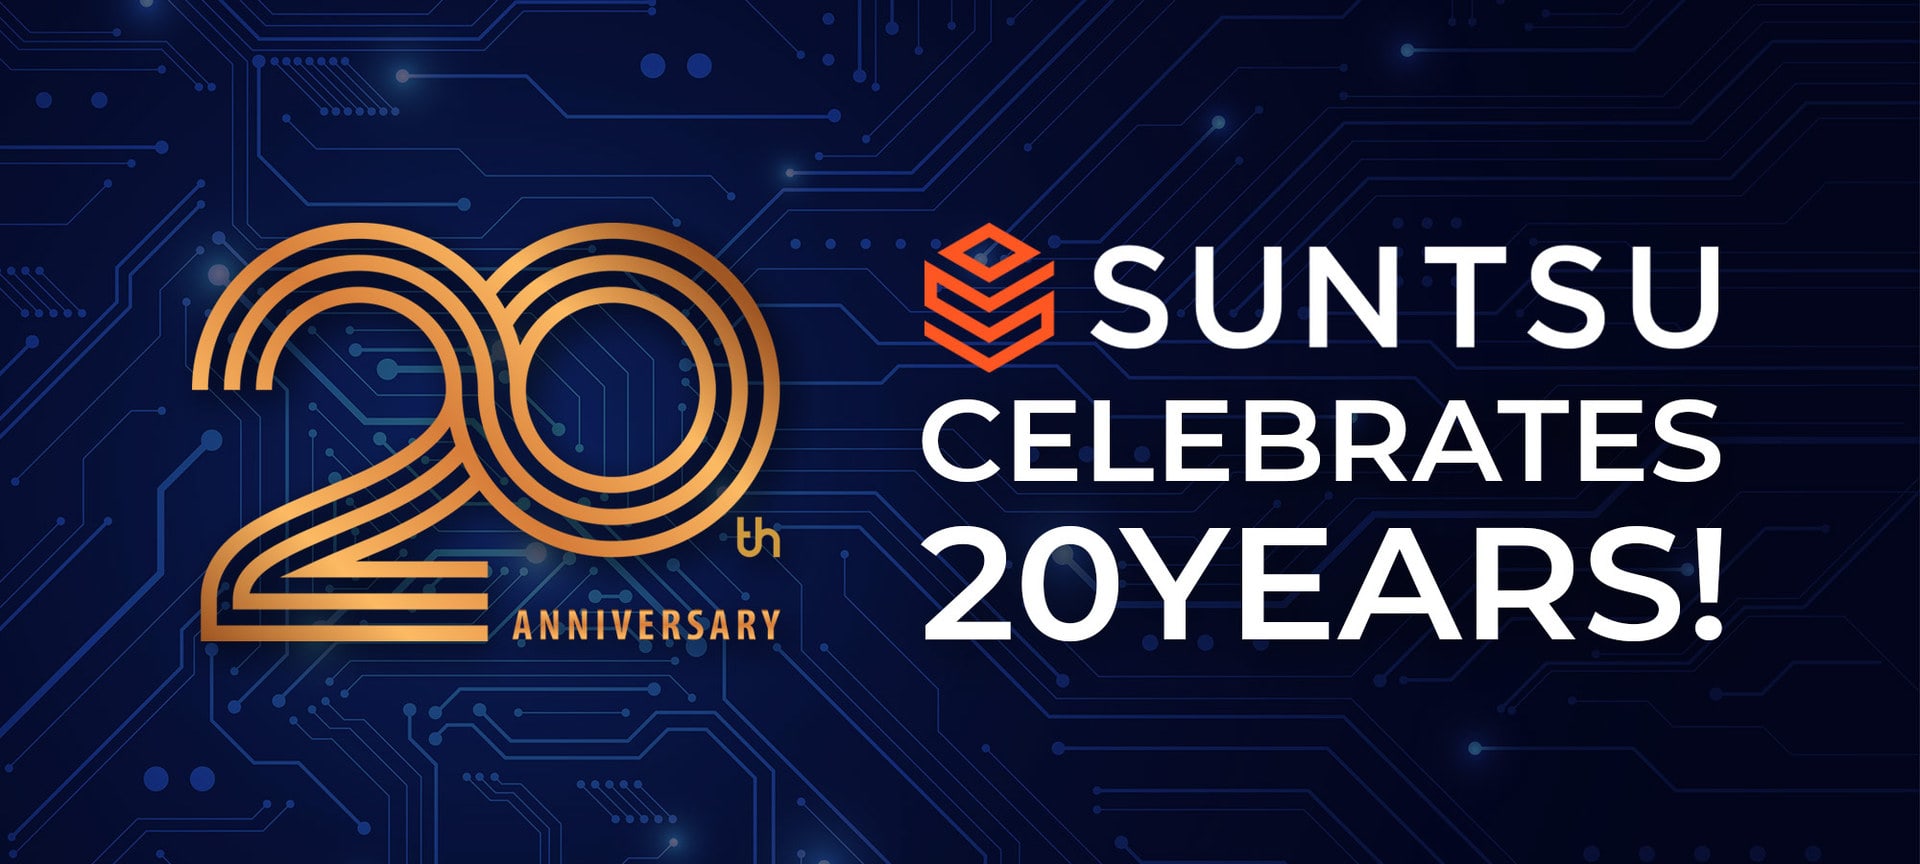 Suntsu Celebrates 20 Years!